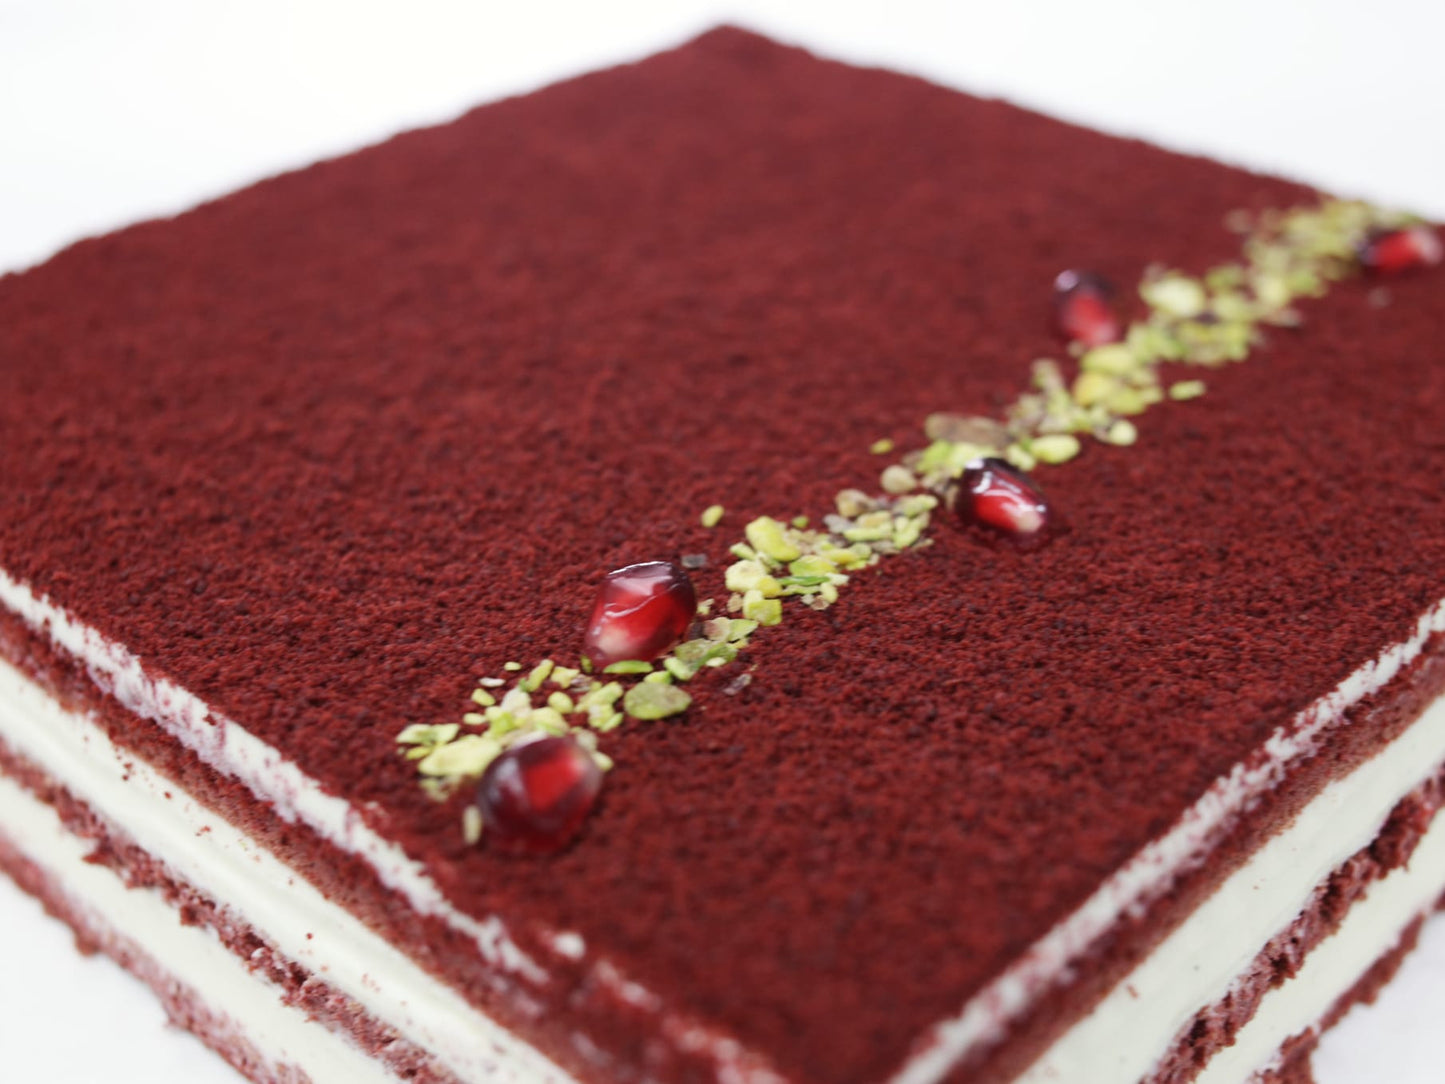 紅絲絨蛋糕 Red velvet